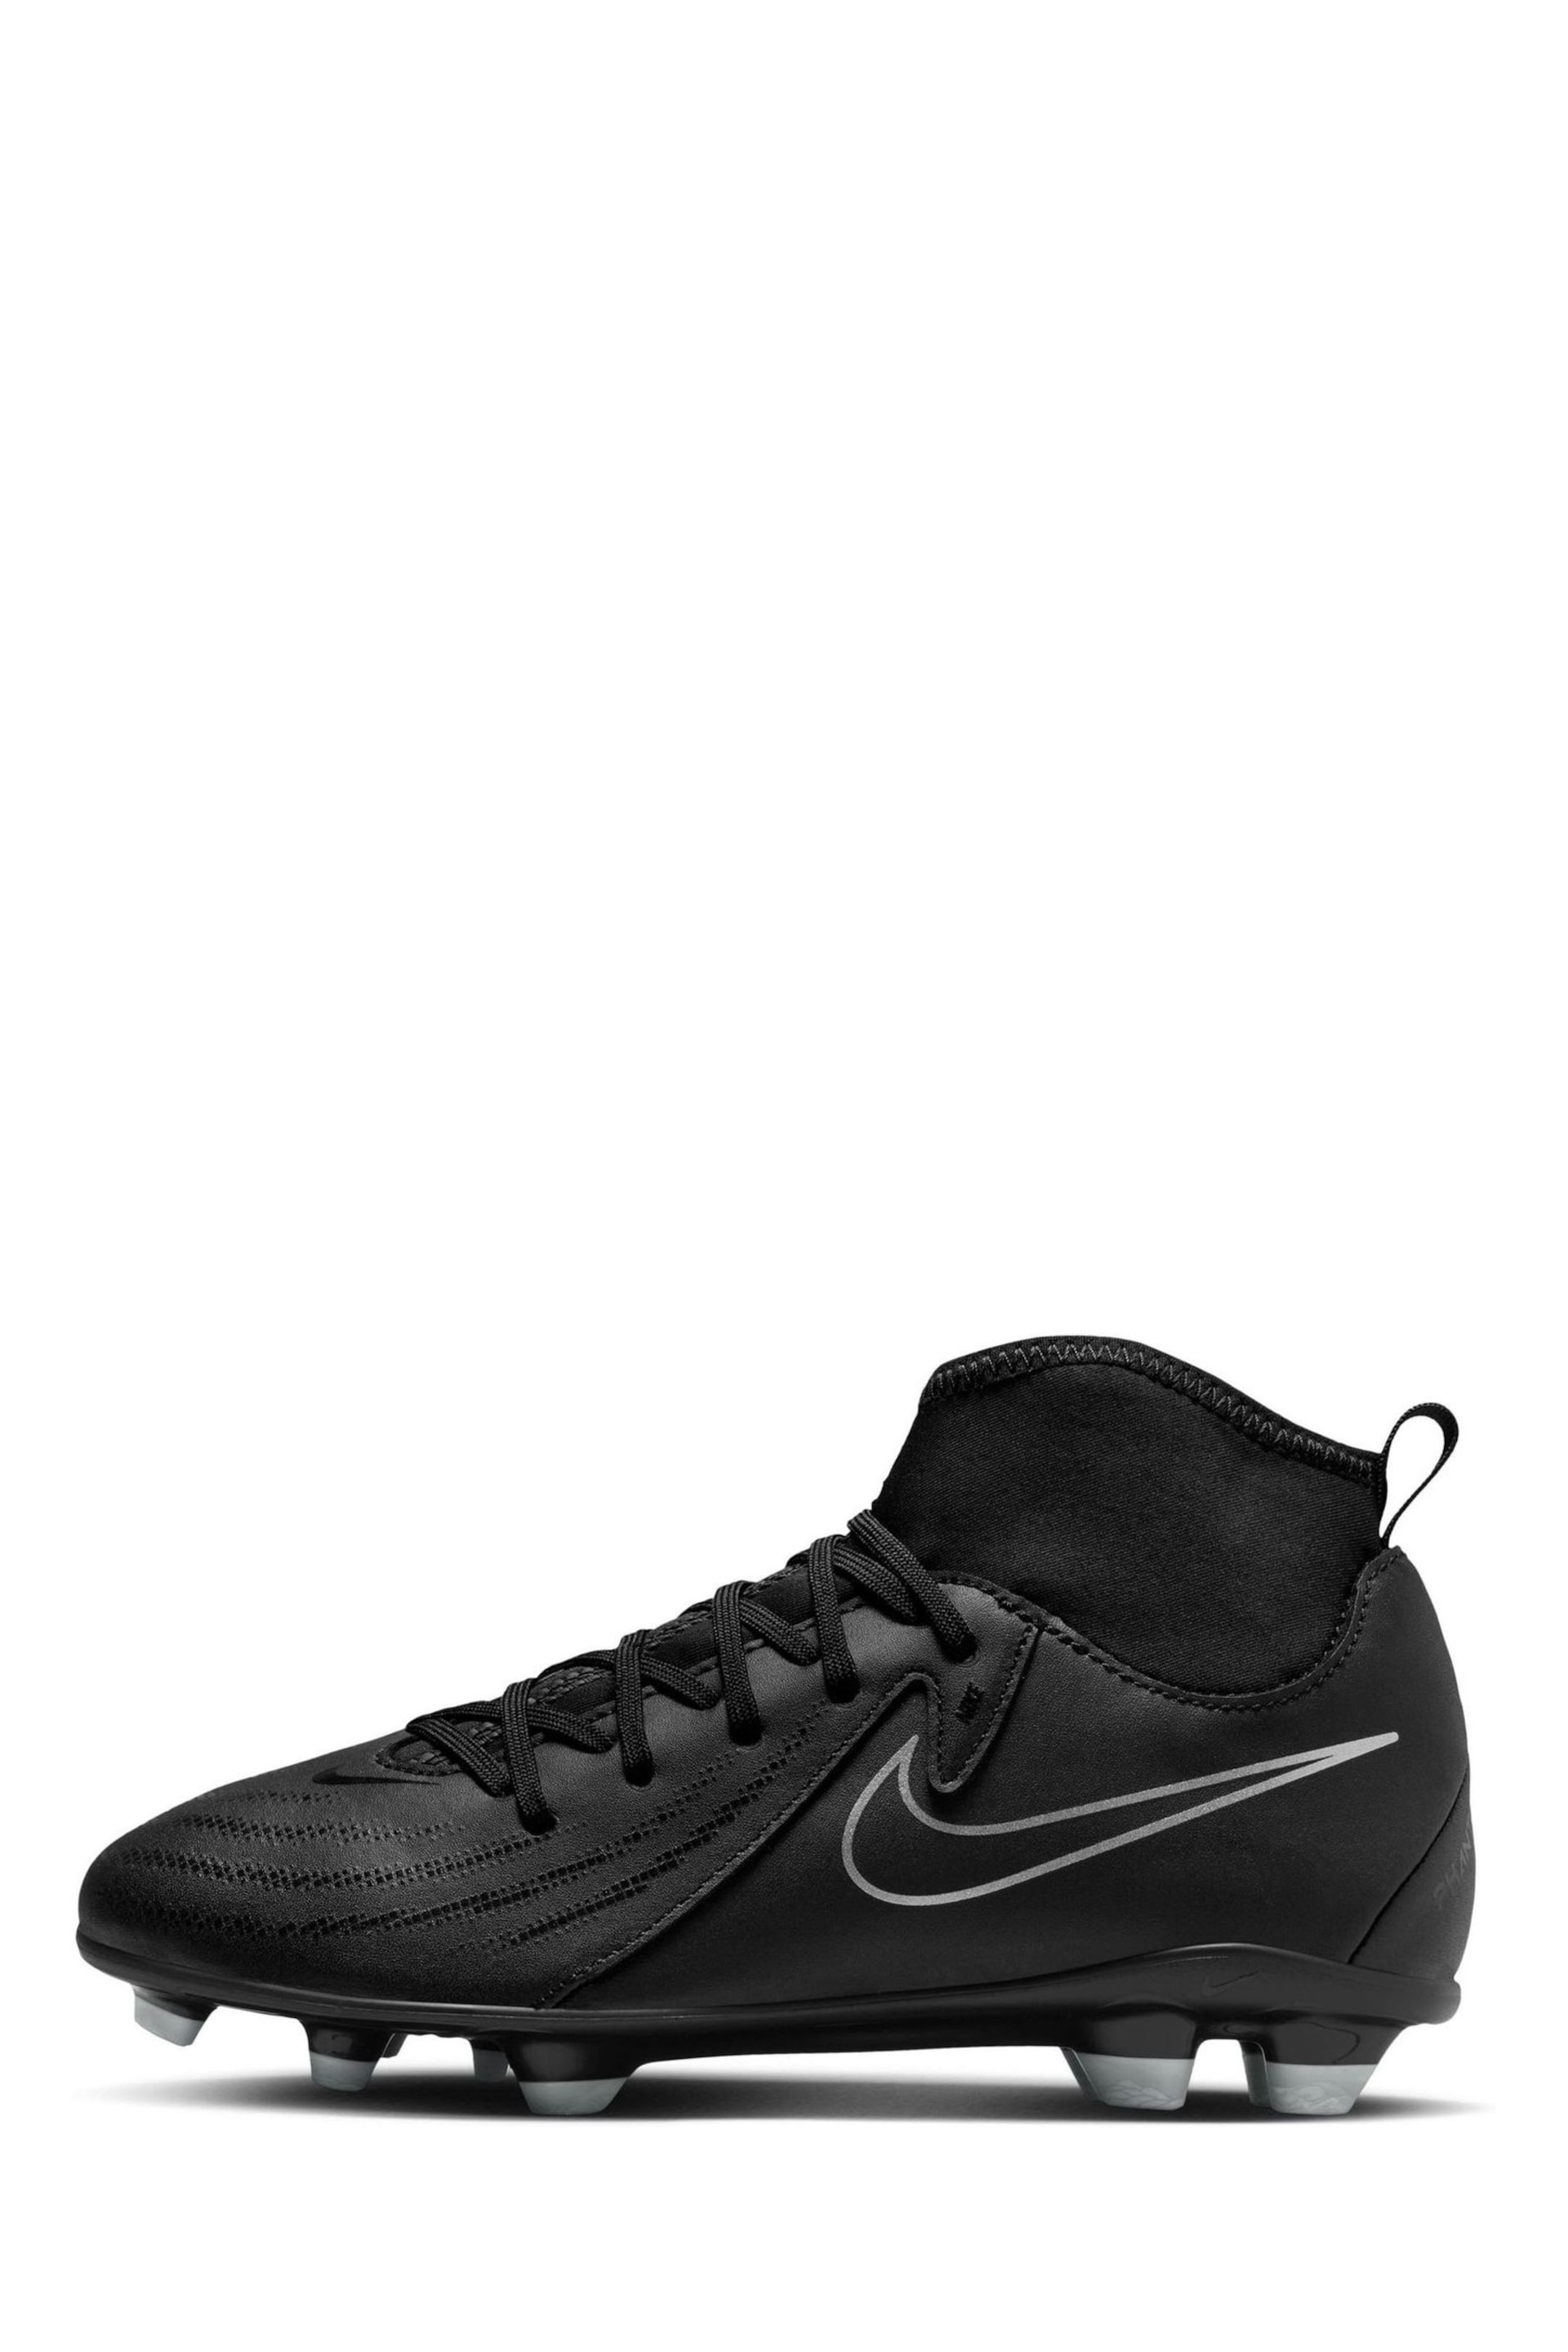 Nike Black Jr. Phantom Luna Club Multi Ground Football Boots - Image 2 of 9